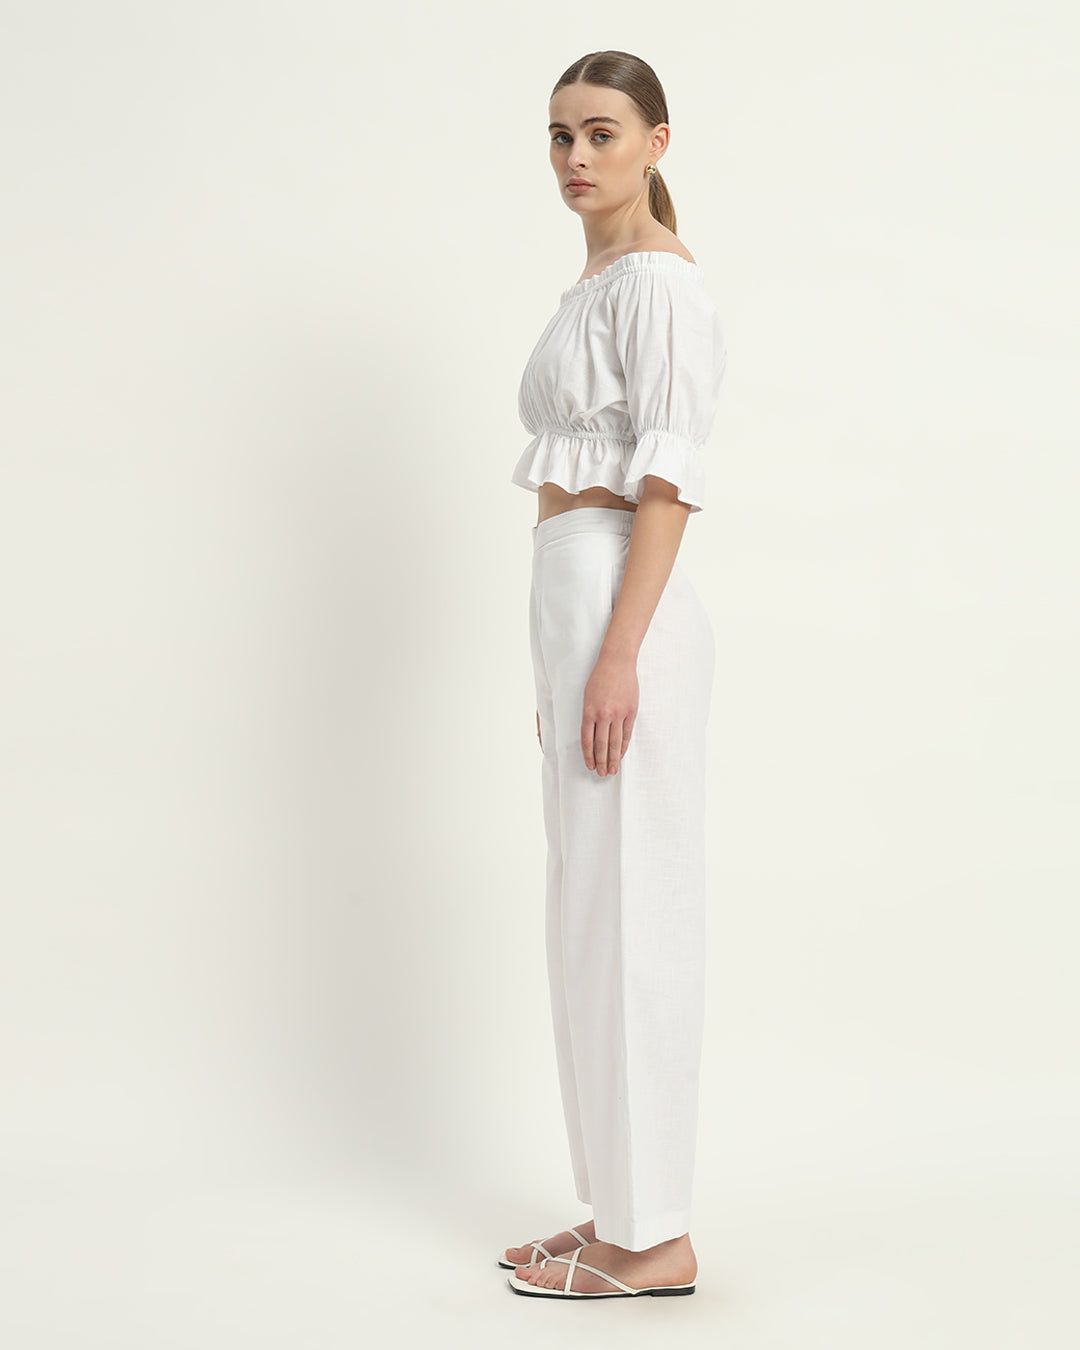 Pants Matching Set- White Linen Radiant Ruche